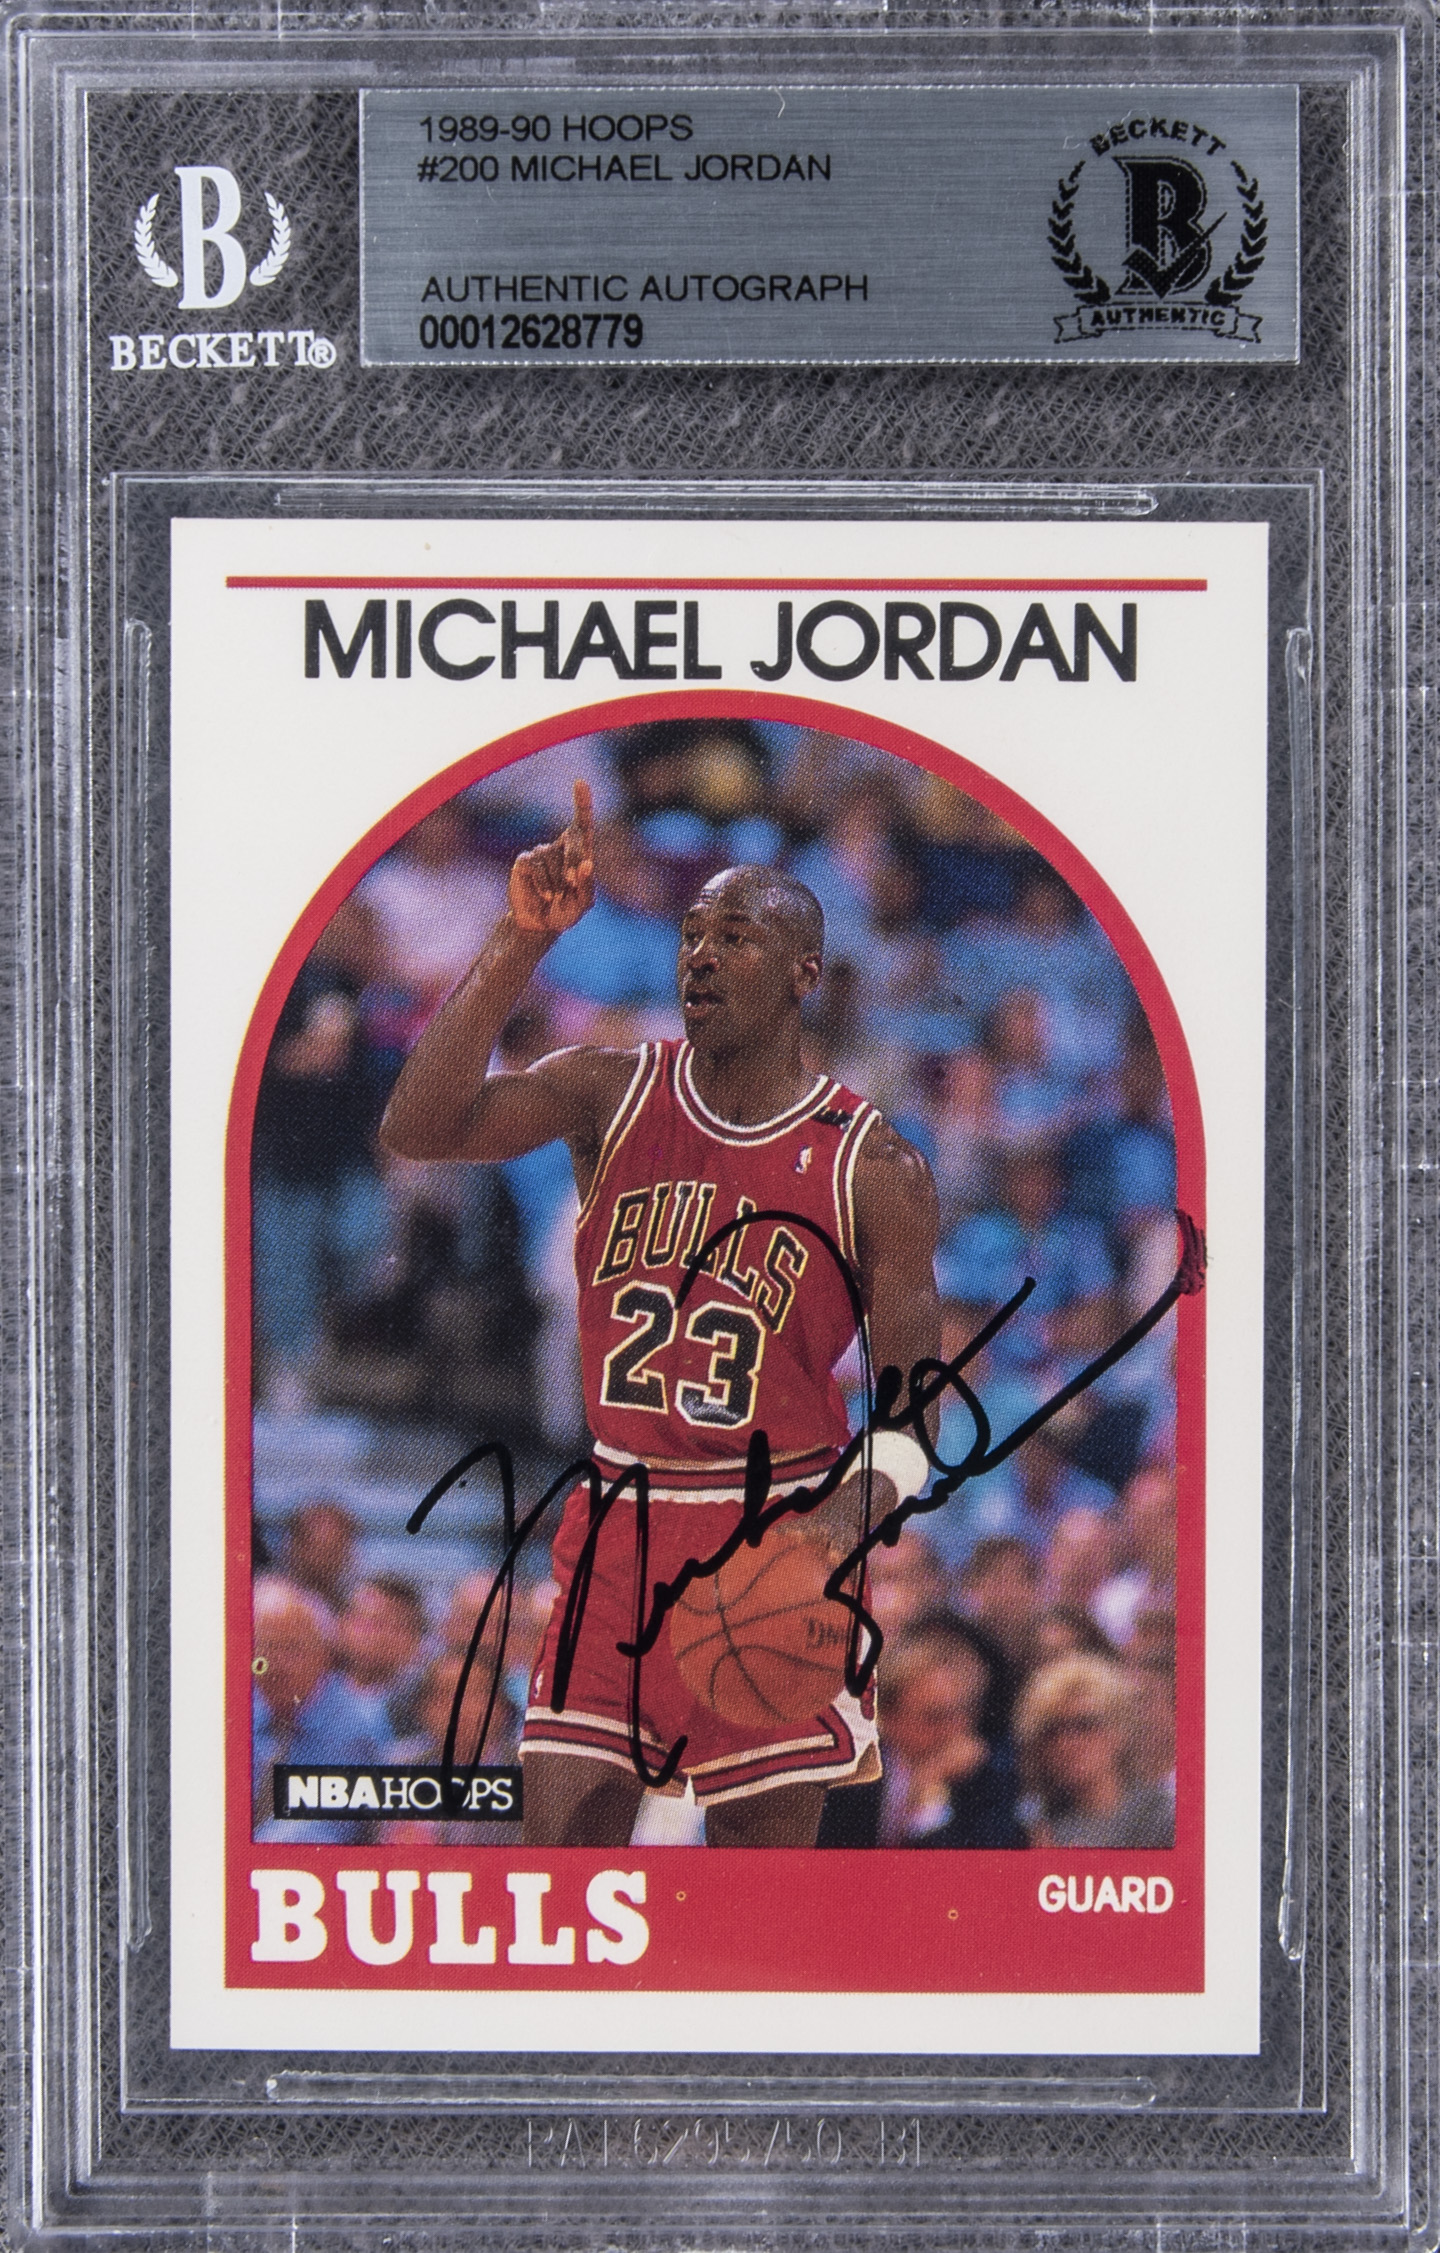 Michael Jordan Autograph Card